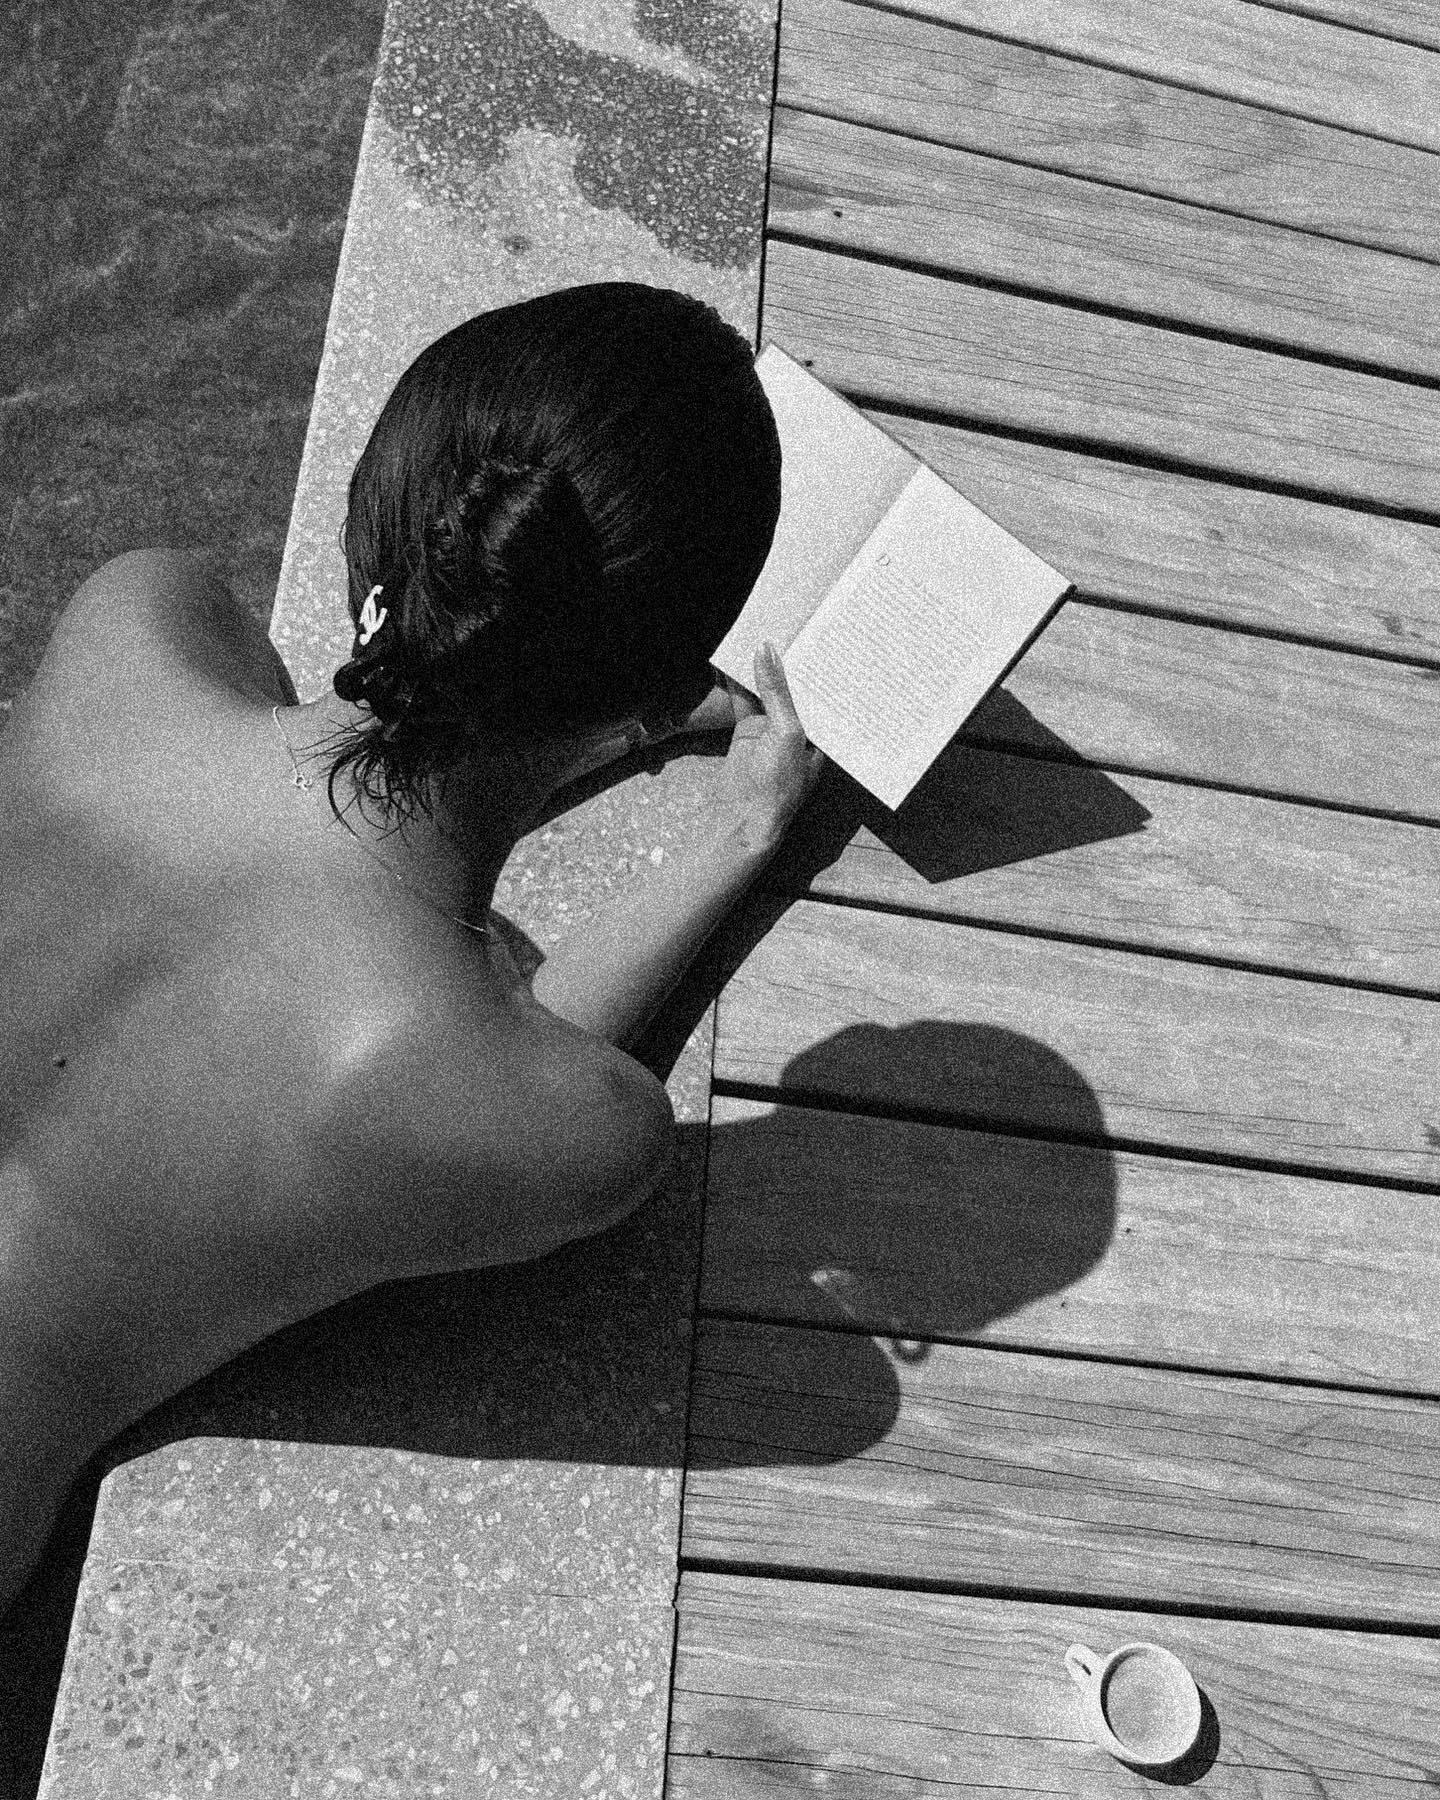 Nicole Poturalski reads a book topless